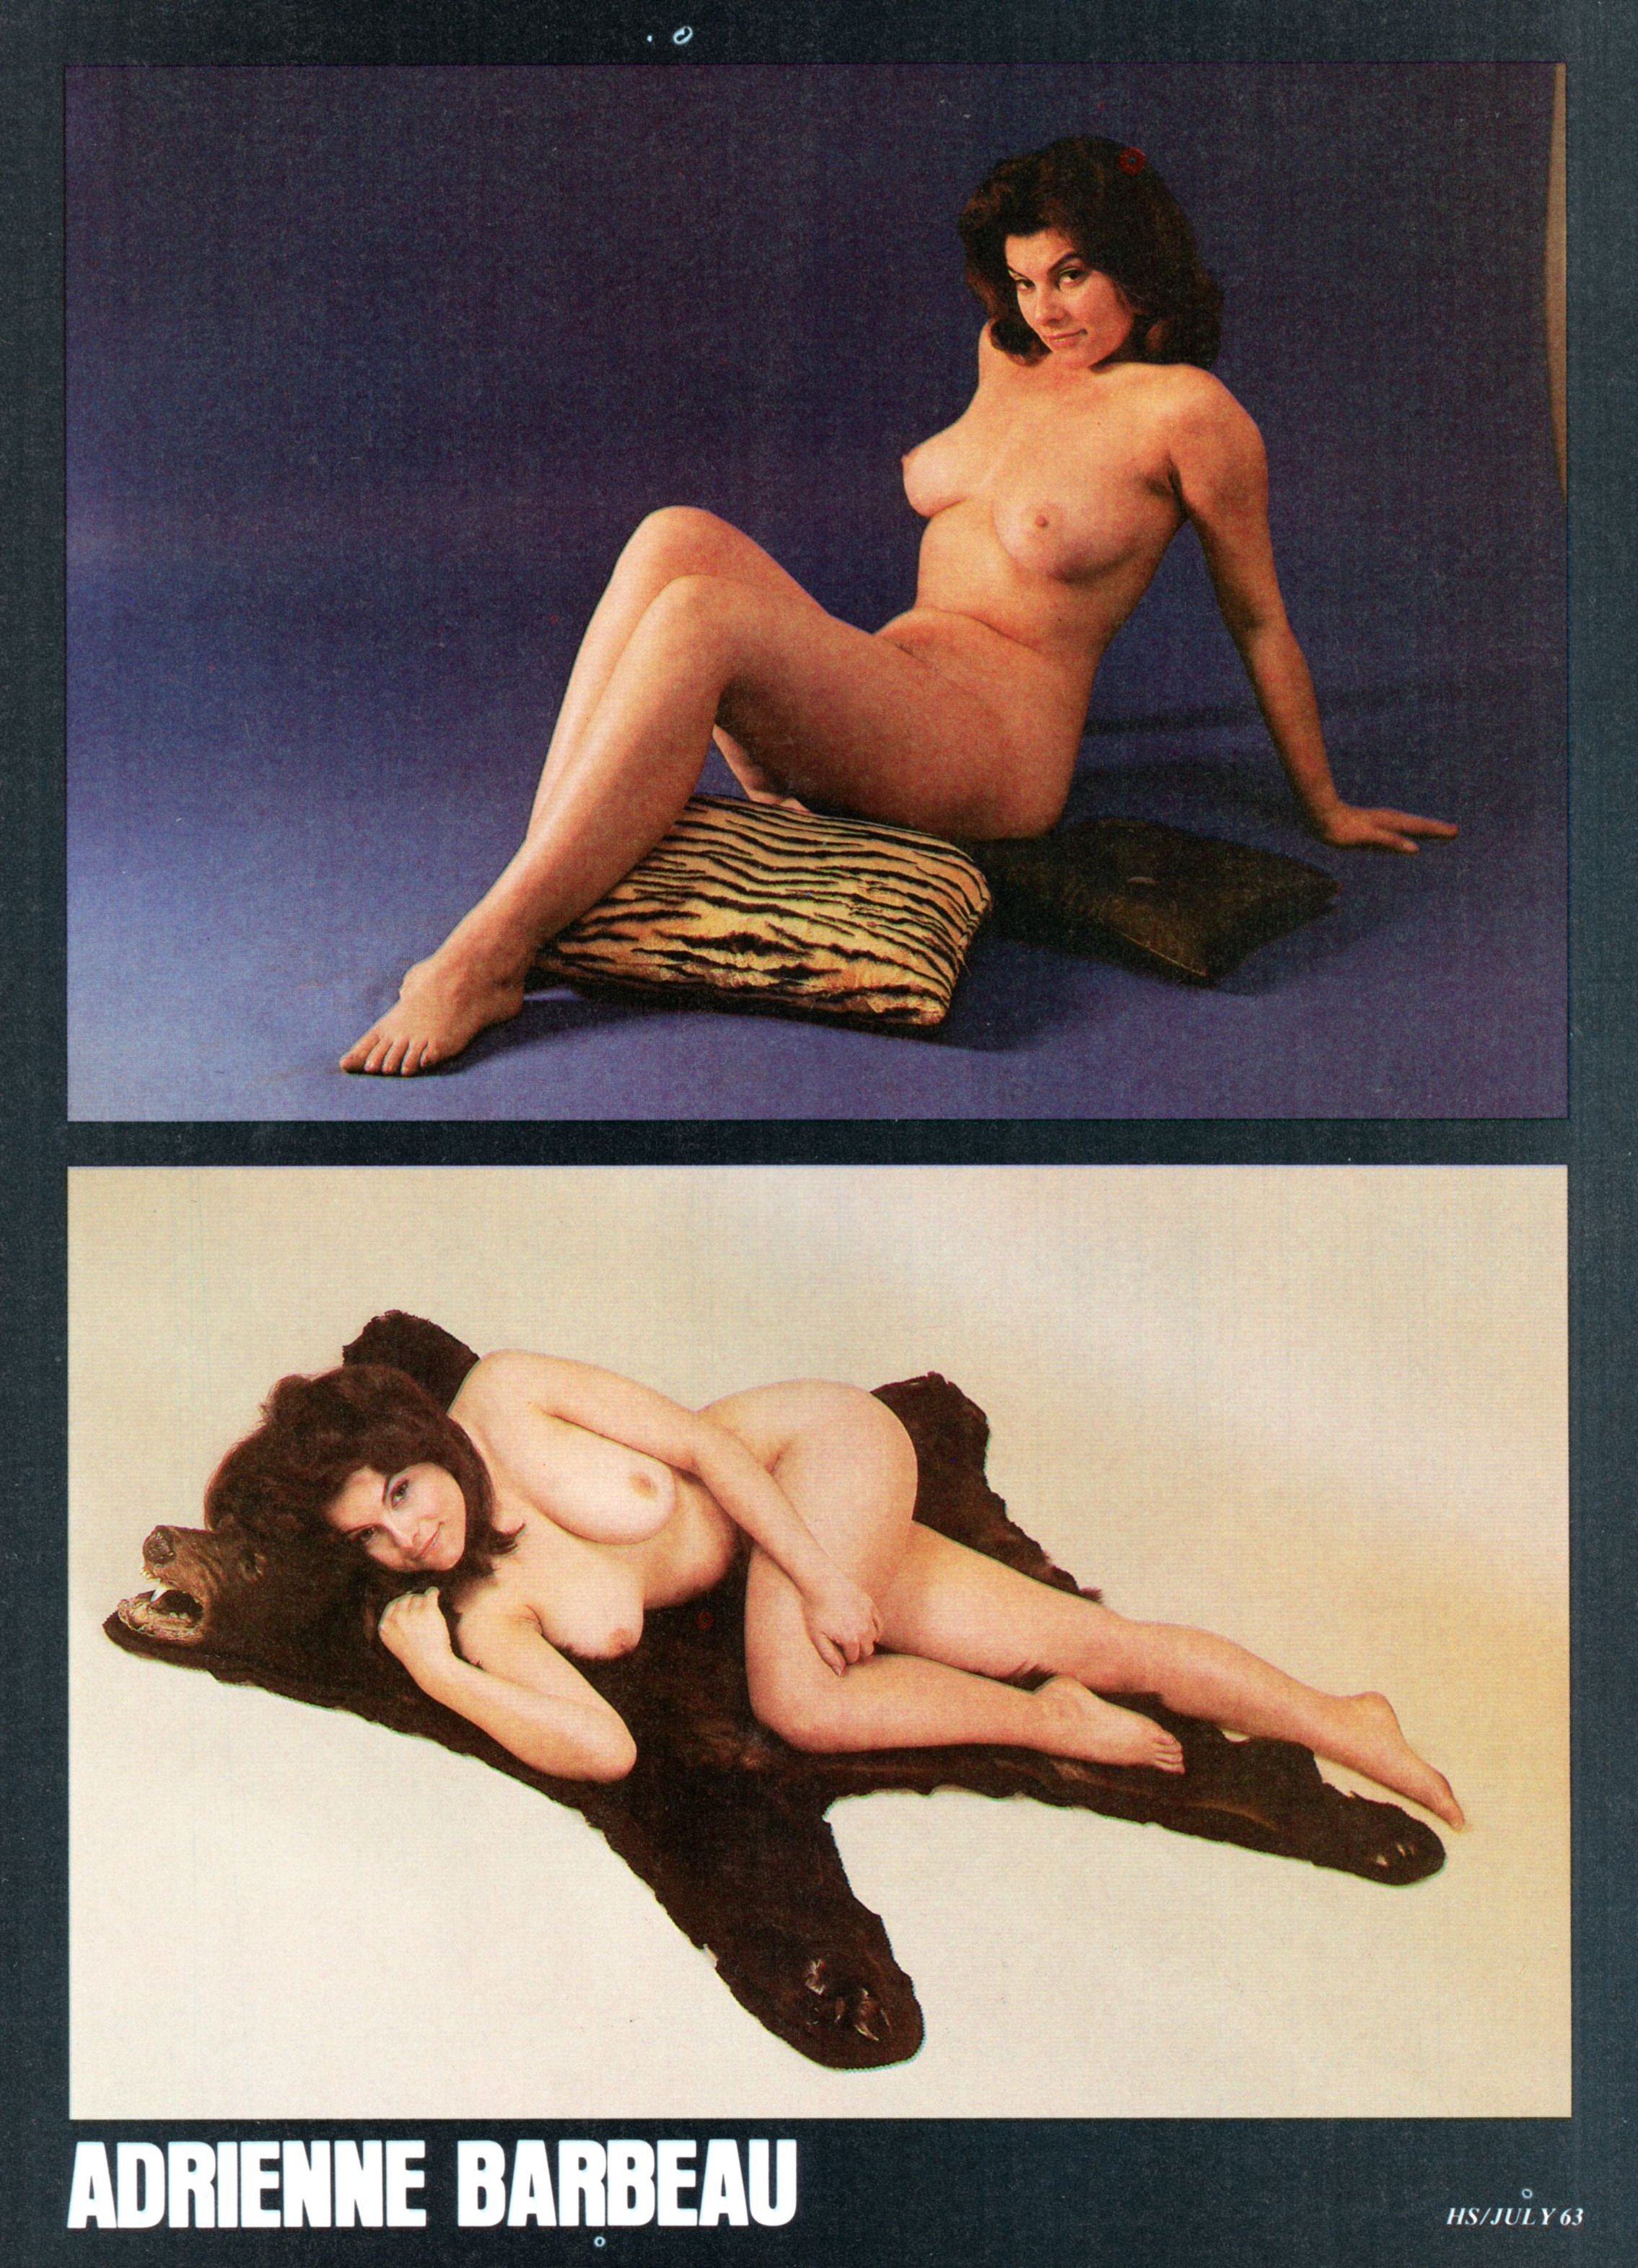 Adrienne Barbeau in the Nude.